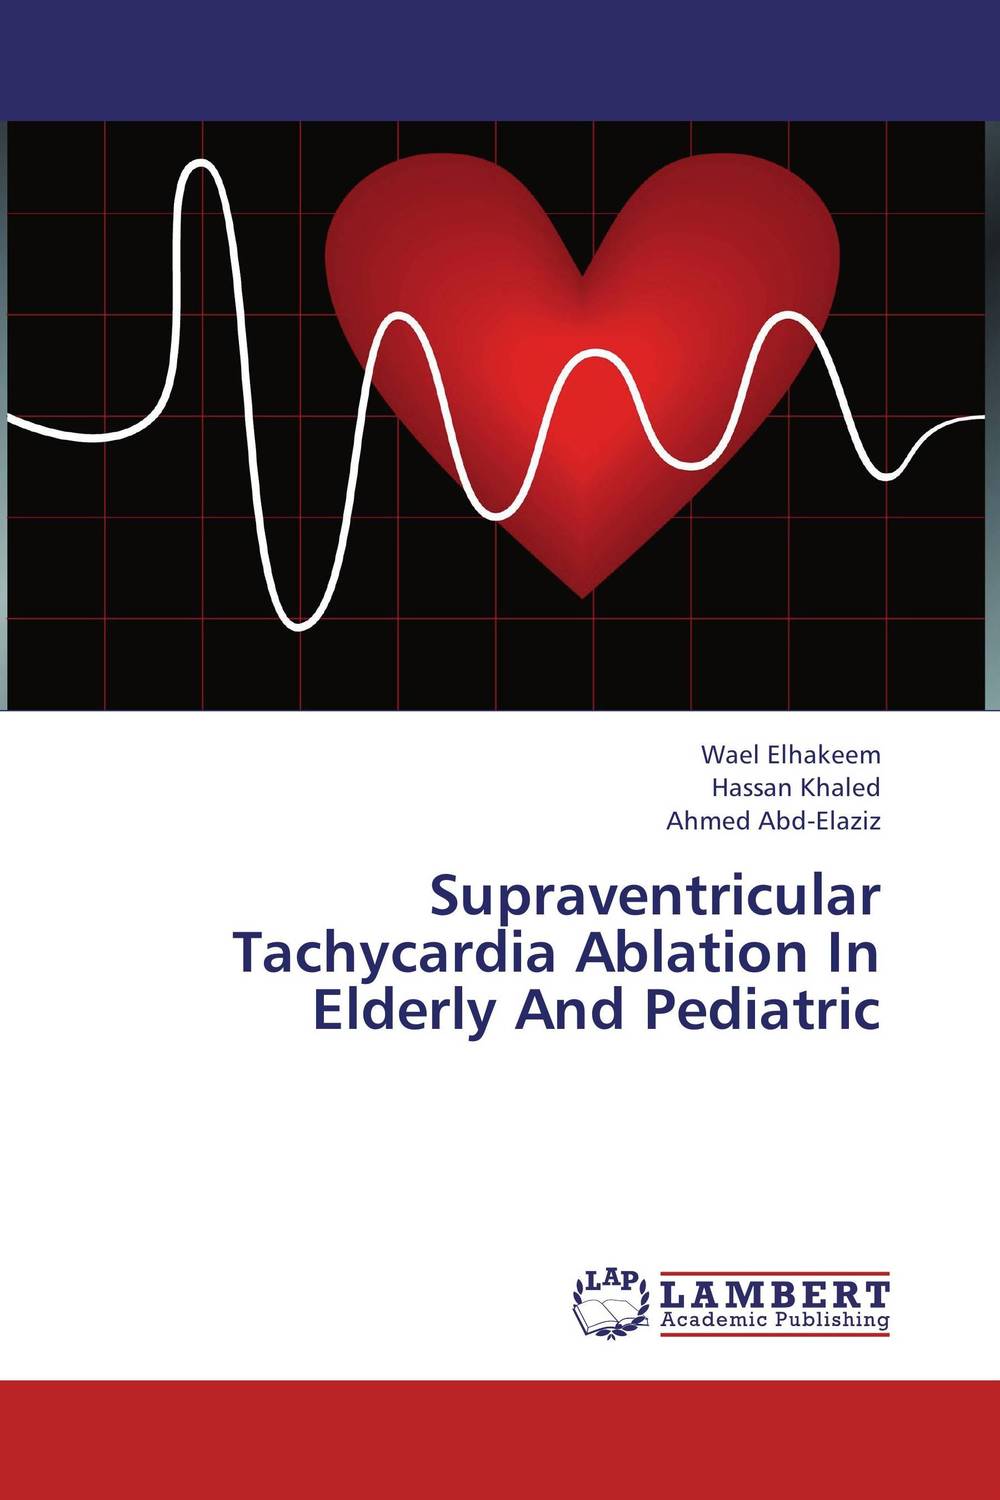 Supraventricular Tachycardia Ablation In Elderly And Pediatric, Wael Elhakeem,Hassan Khaled and Ahmed Abd-Elaziz